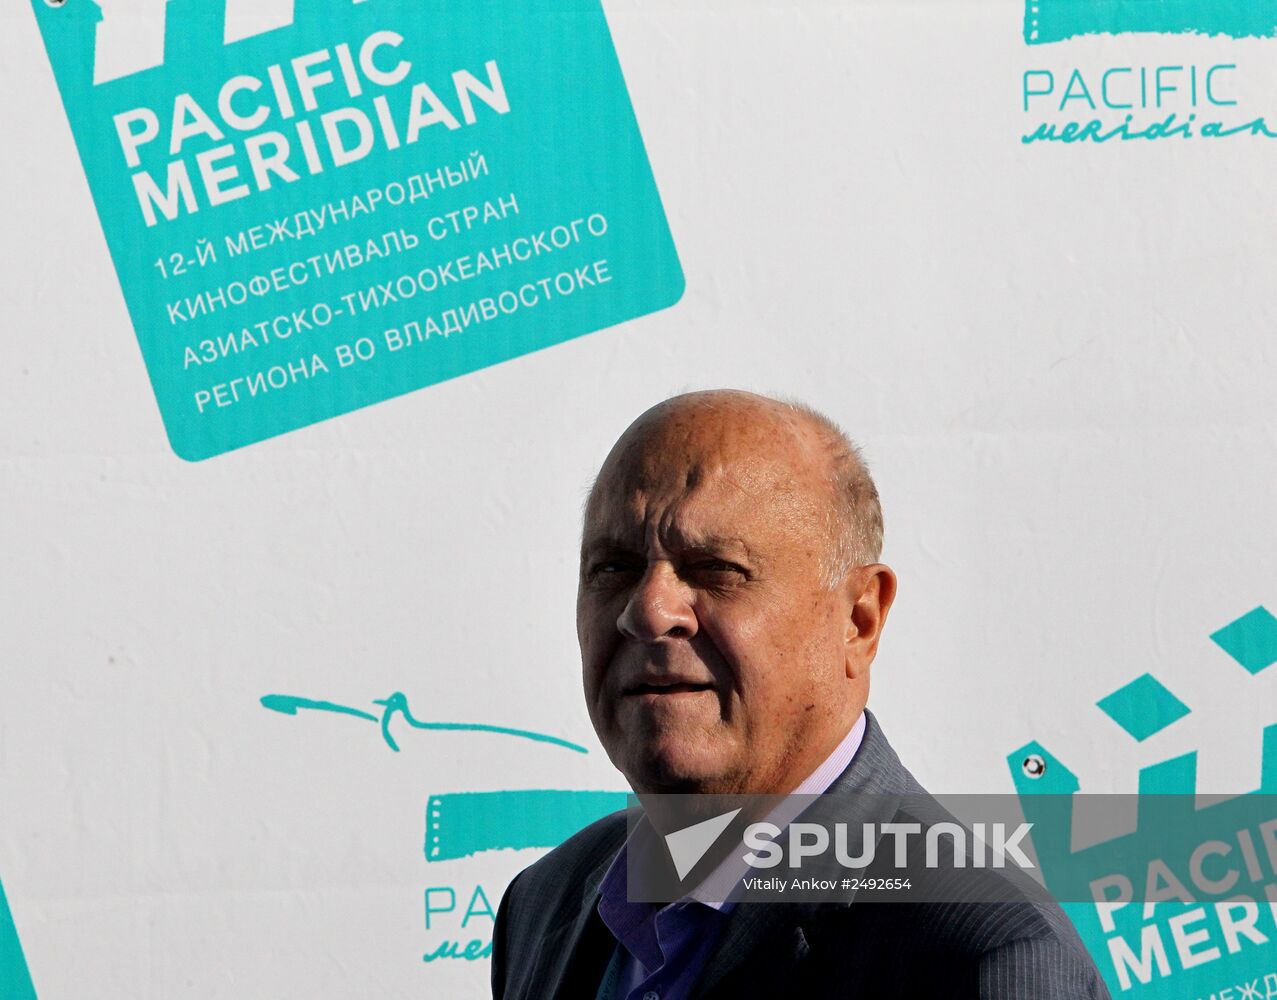 Opening of the "Pacific Meridian" International Film Festival in Vladivostok